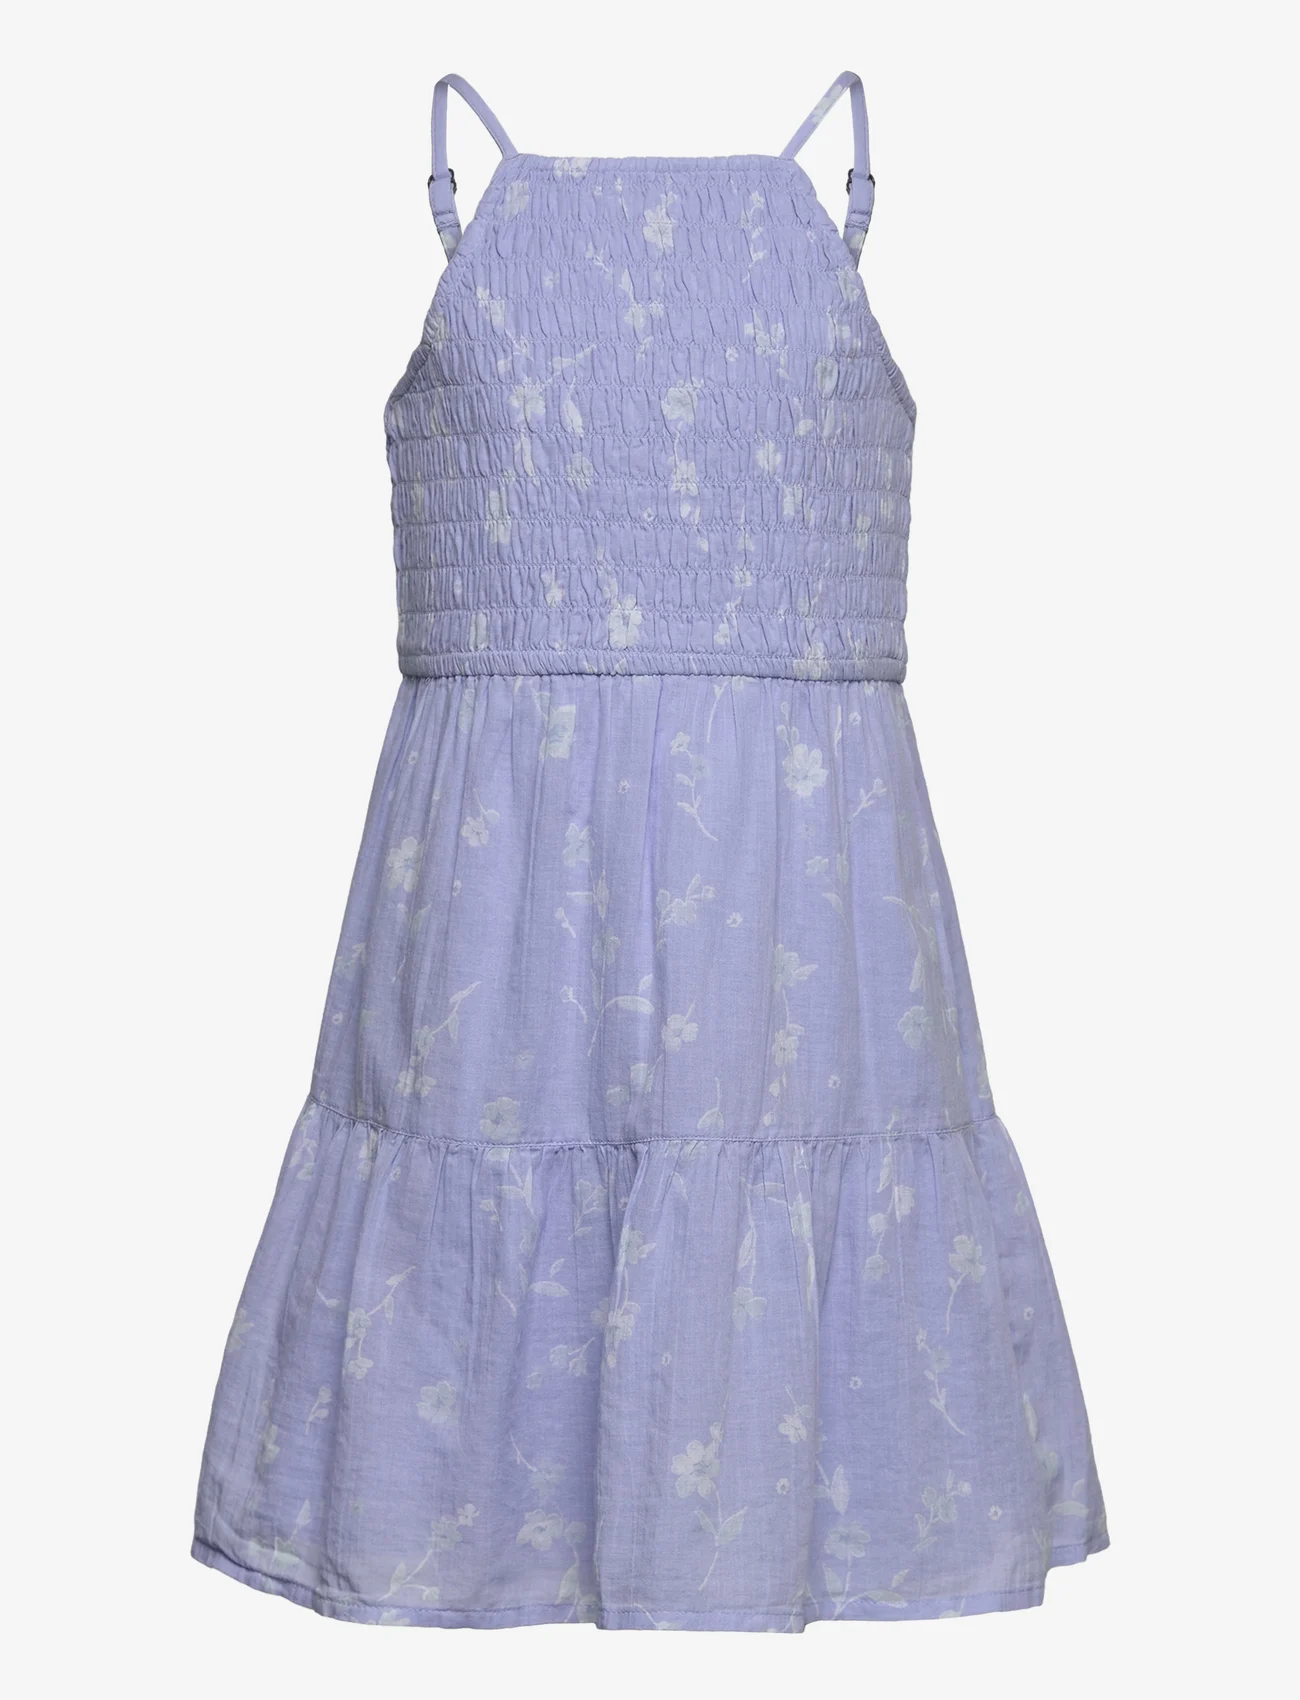 Abercrombie & Fitch - kids GIRLS DRESSES - kurzärmelige freizeitkleider - blue floral - 0